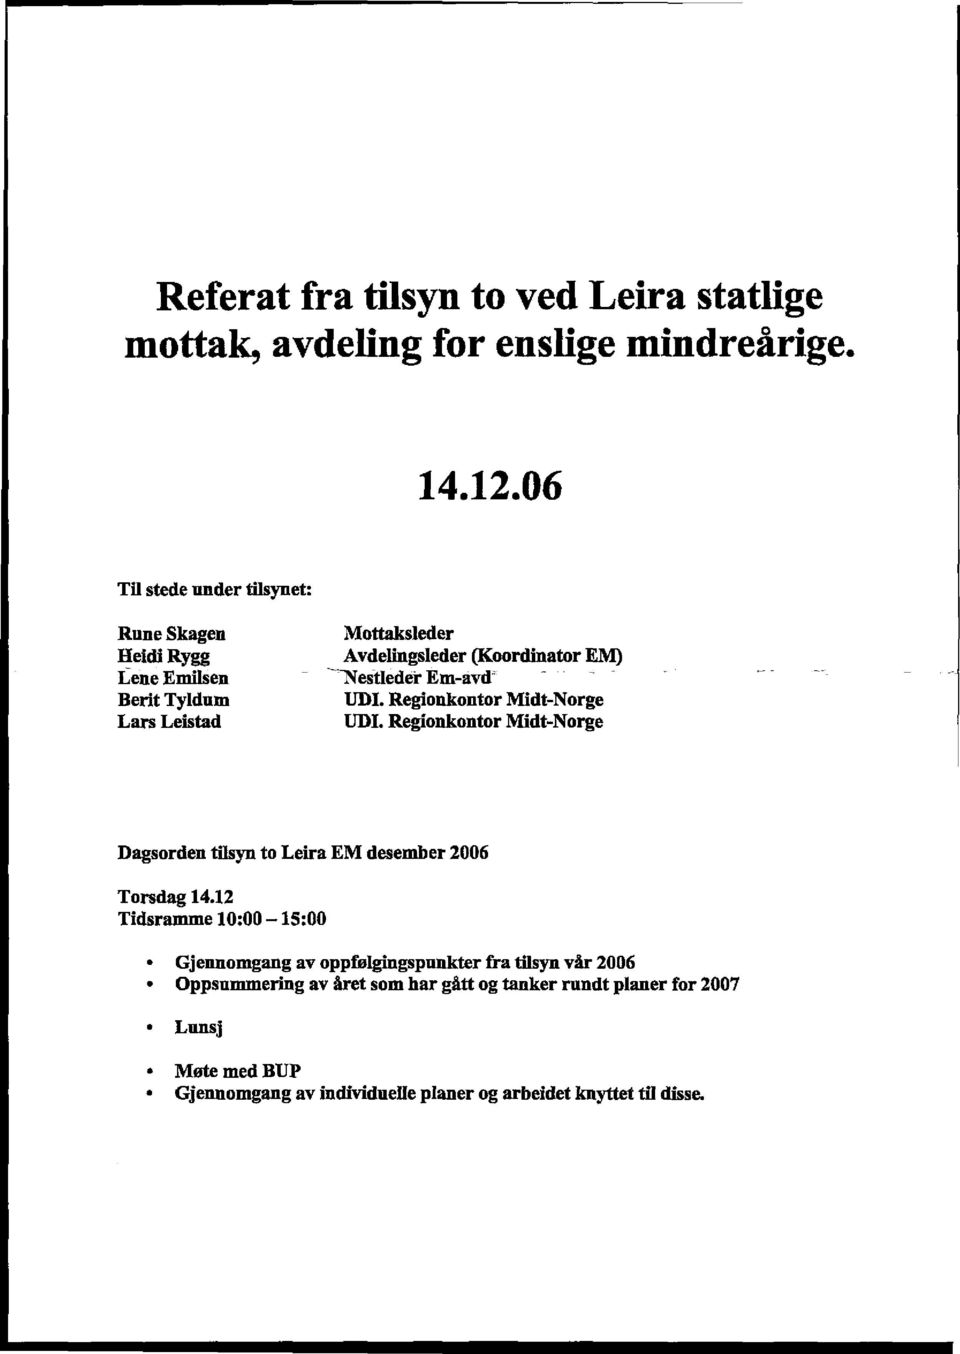 III». Reglonkontor Midt-Norge Lars Leistad Ul». Regionkontor Midt-Norge Dagsorden tilsyn to Leira EM desember 2006 Torsdag 14.